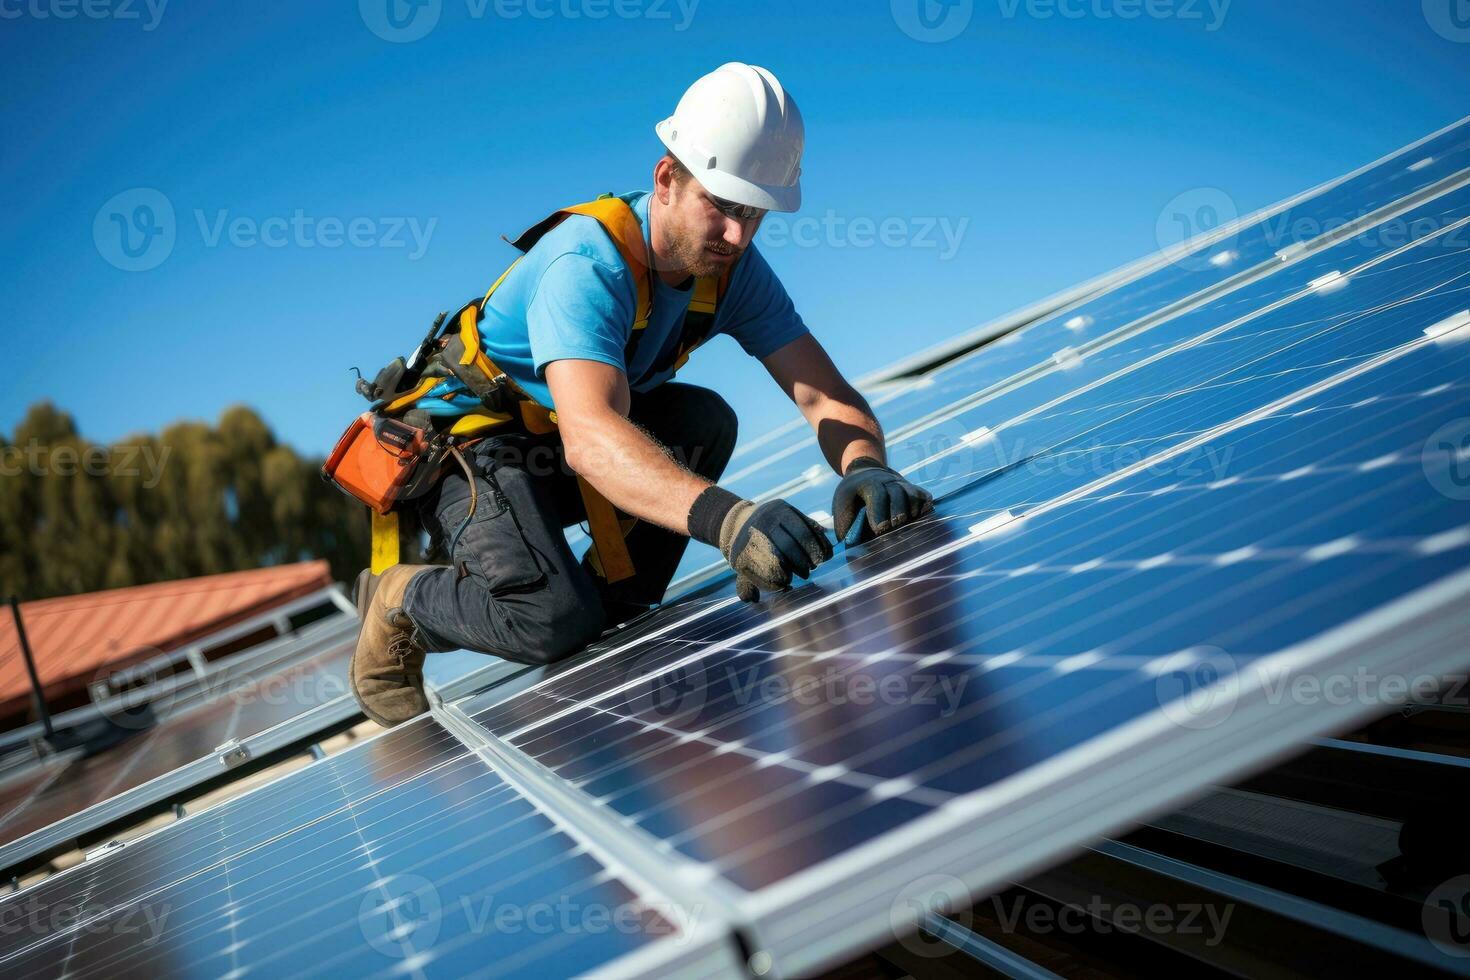 installeren zonne- fotovoltaïsche paneel systeem. alternatief energie ecologisch concept. foto